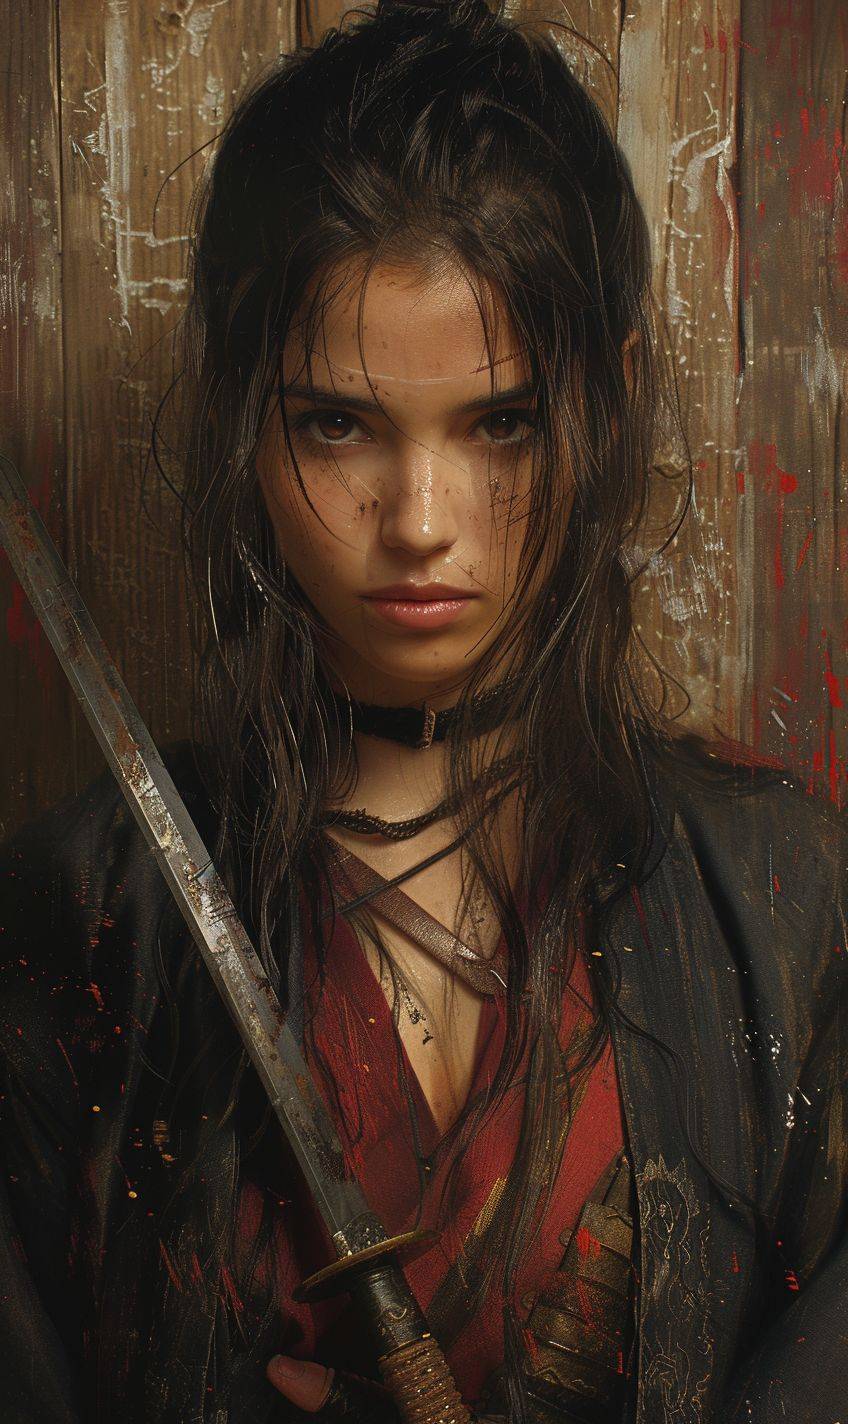 Samurai girl, in the style of cinematic realism, atmospheric impressionism, darkly romantic realism, pre-raphaelite realism, grainy, soft-focused realism